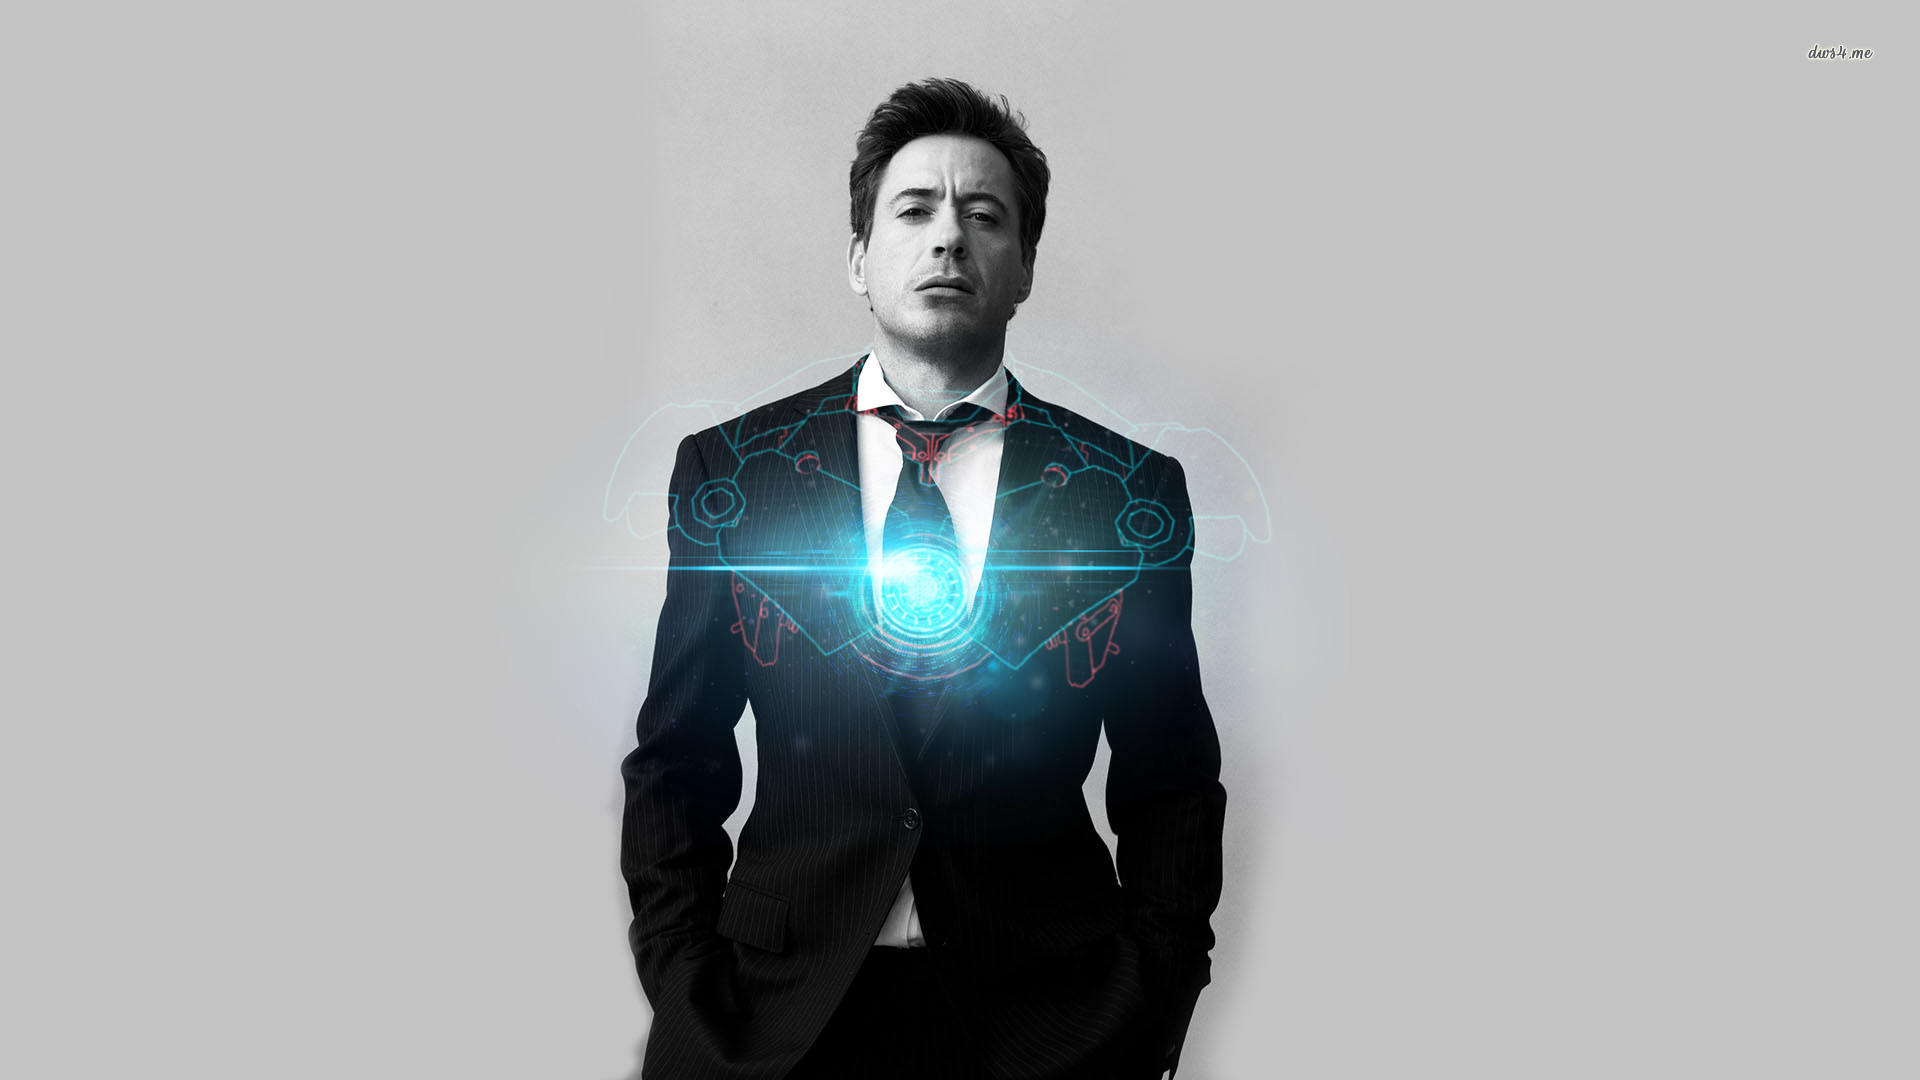 Robert Downey Jr Iron Man Wallpaper Image